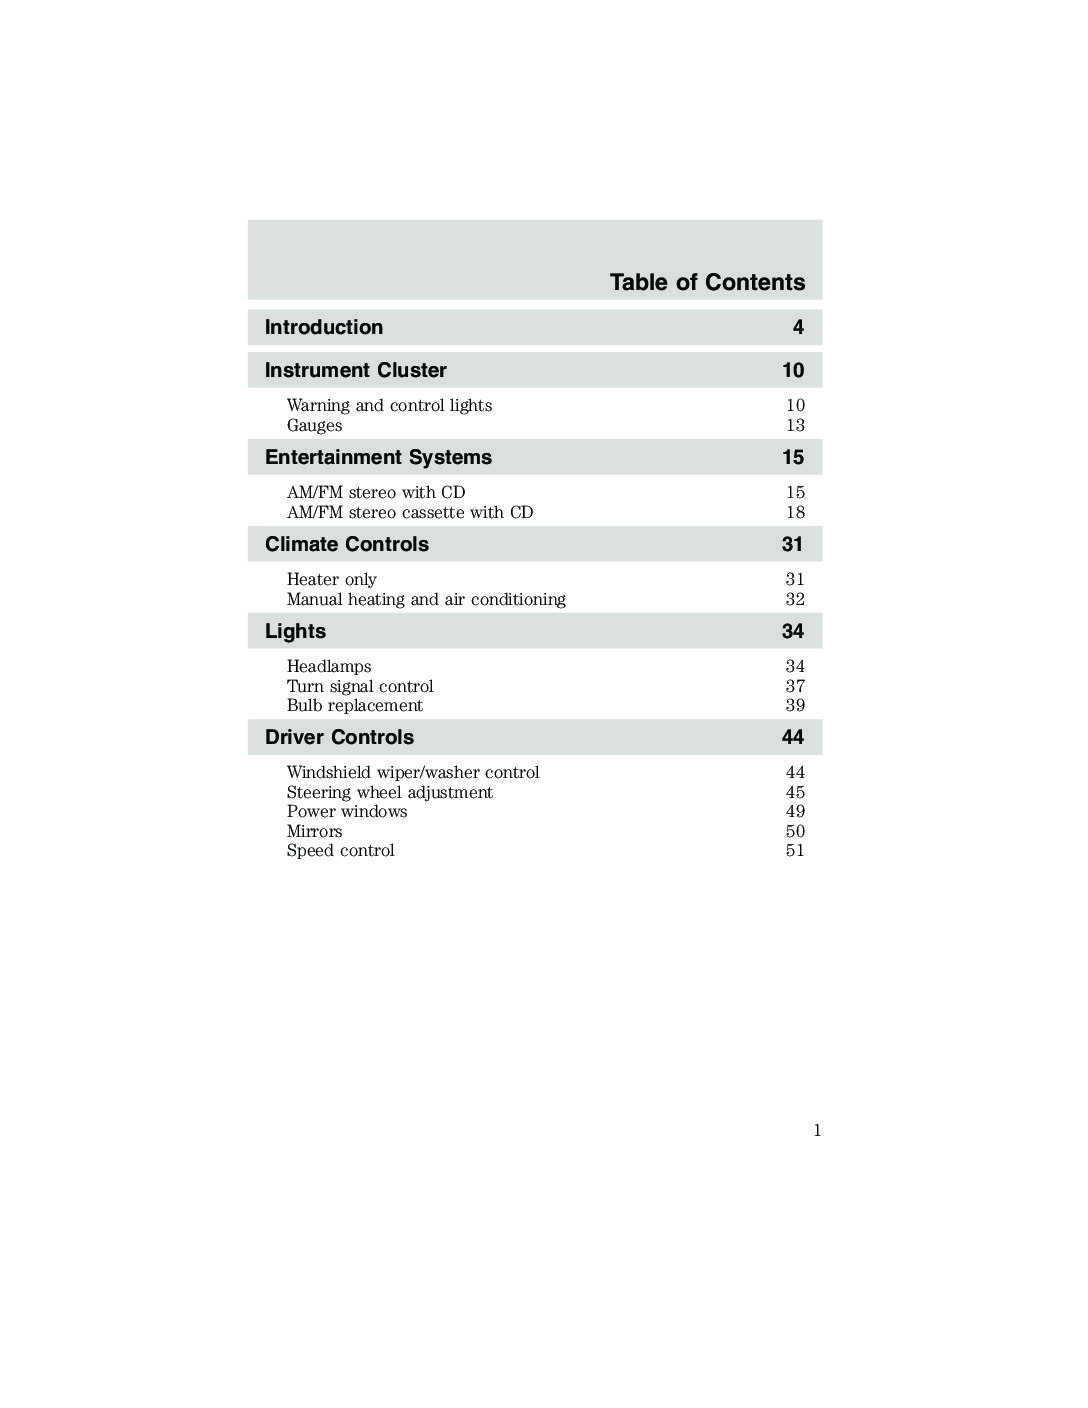 2003 ford escape repair manual pdf